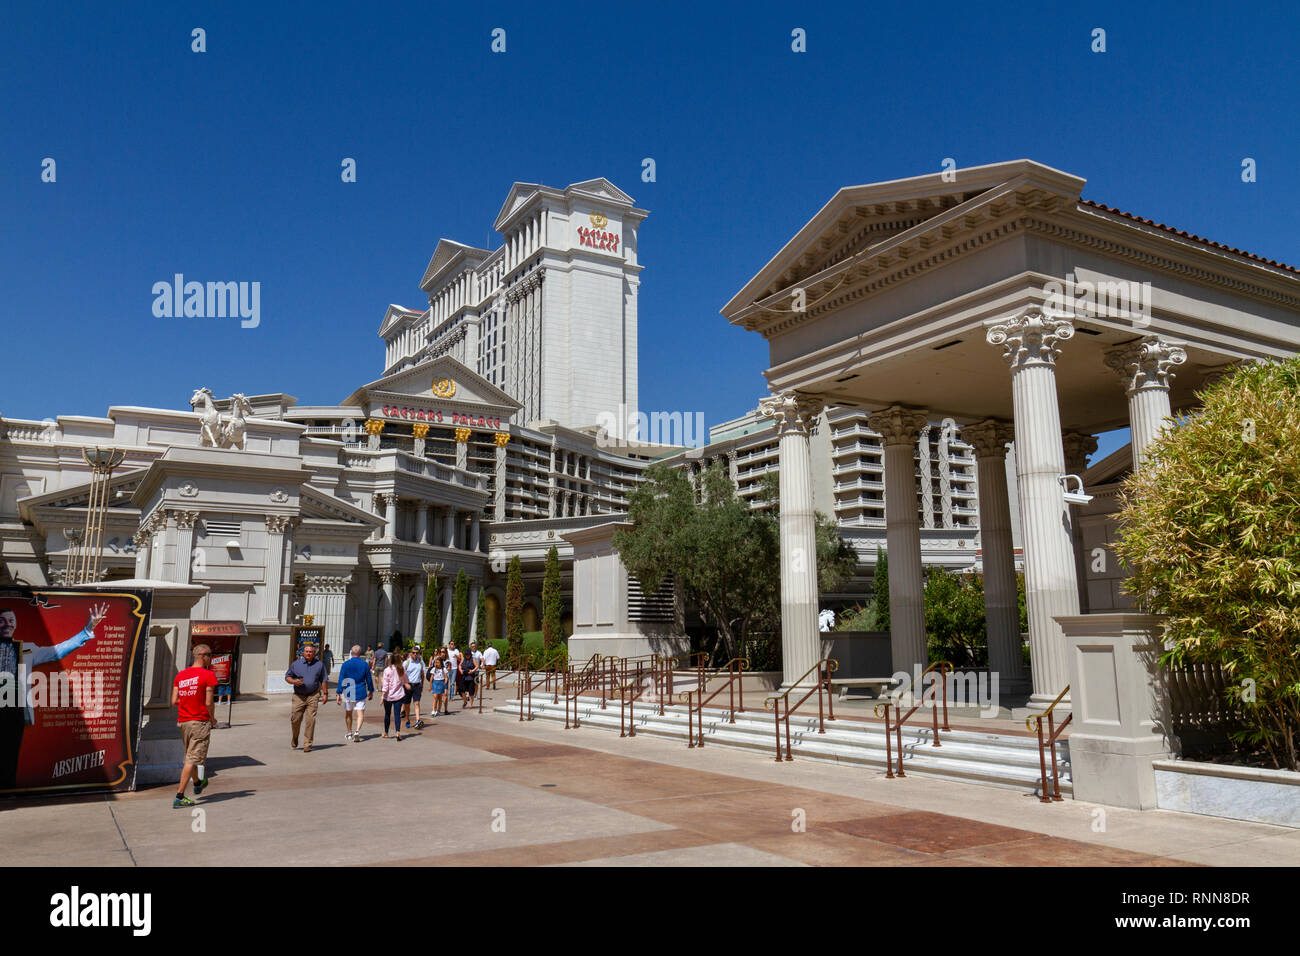 L'ingresso al Caesars Palace Hotel e Casinò sulla Strip di Las Vegas, Nevada, Stati Uniti. Foto Stock